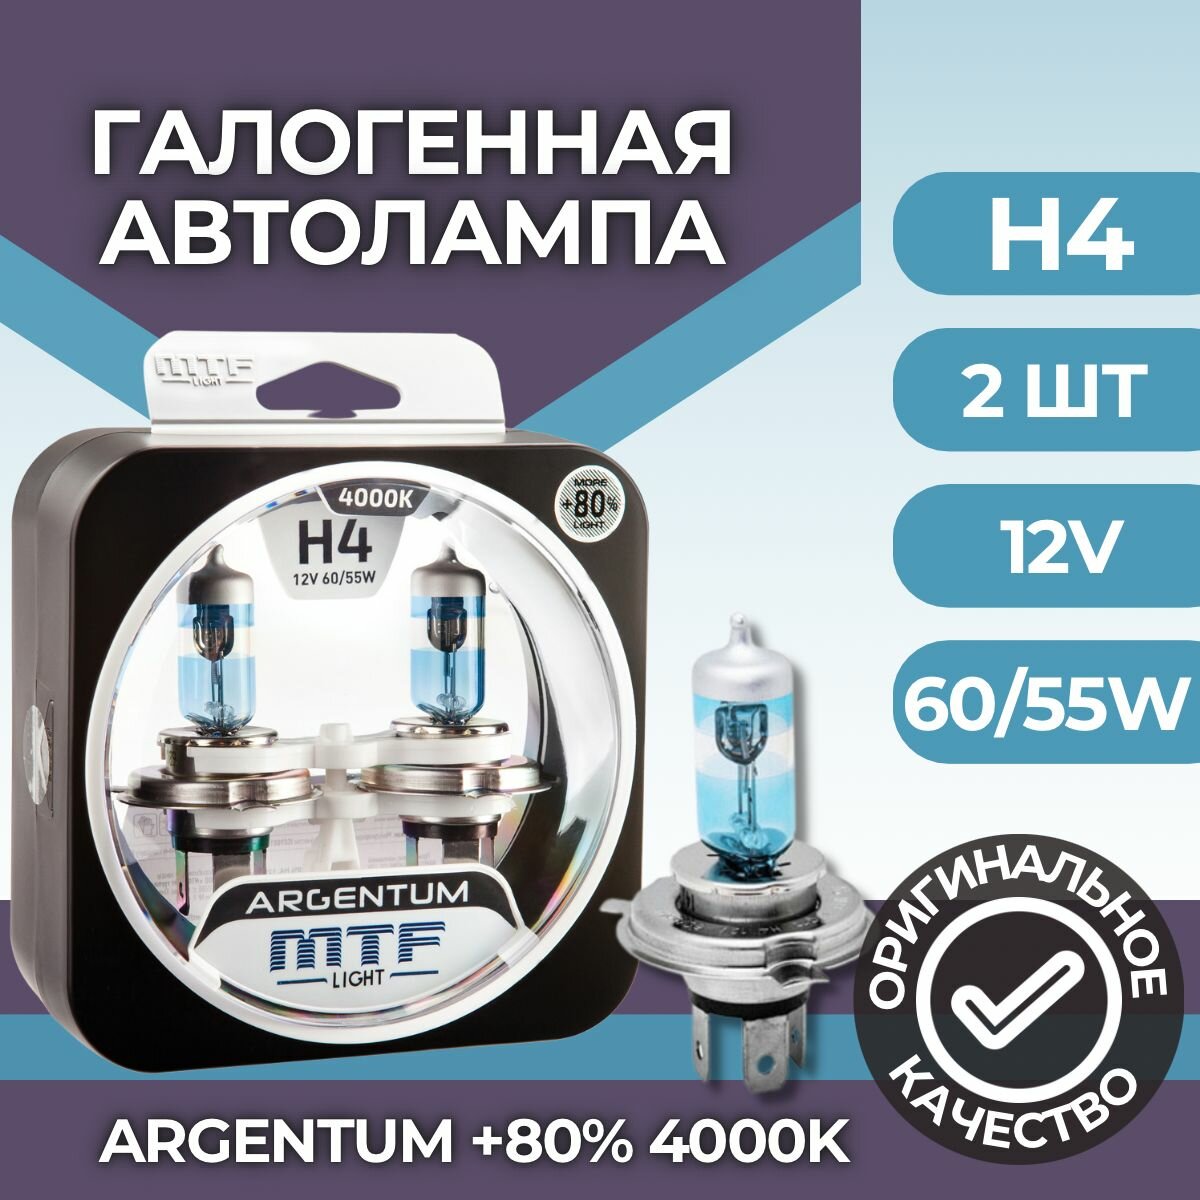 Галогеновые лампы MTF light ARGENTUM +80% H4 4000K